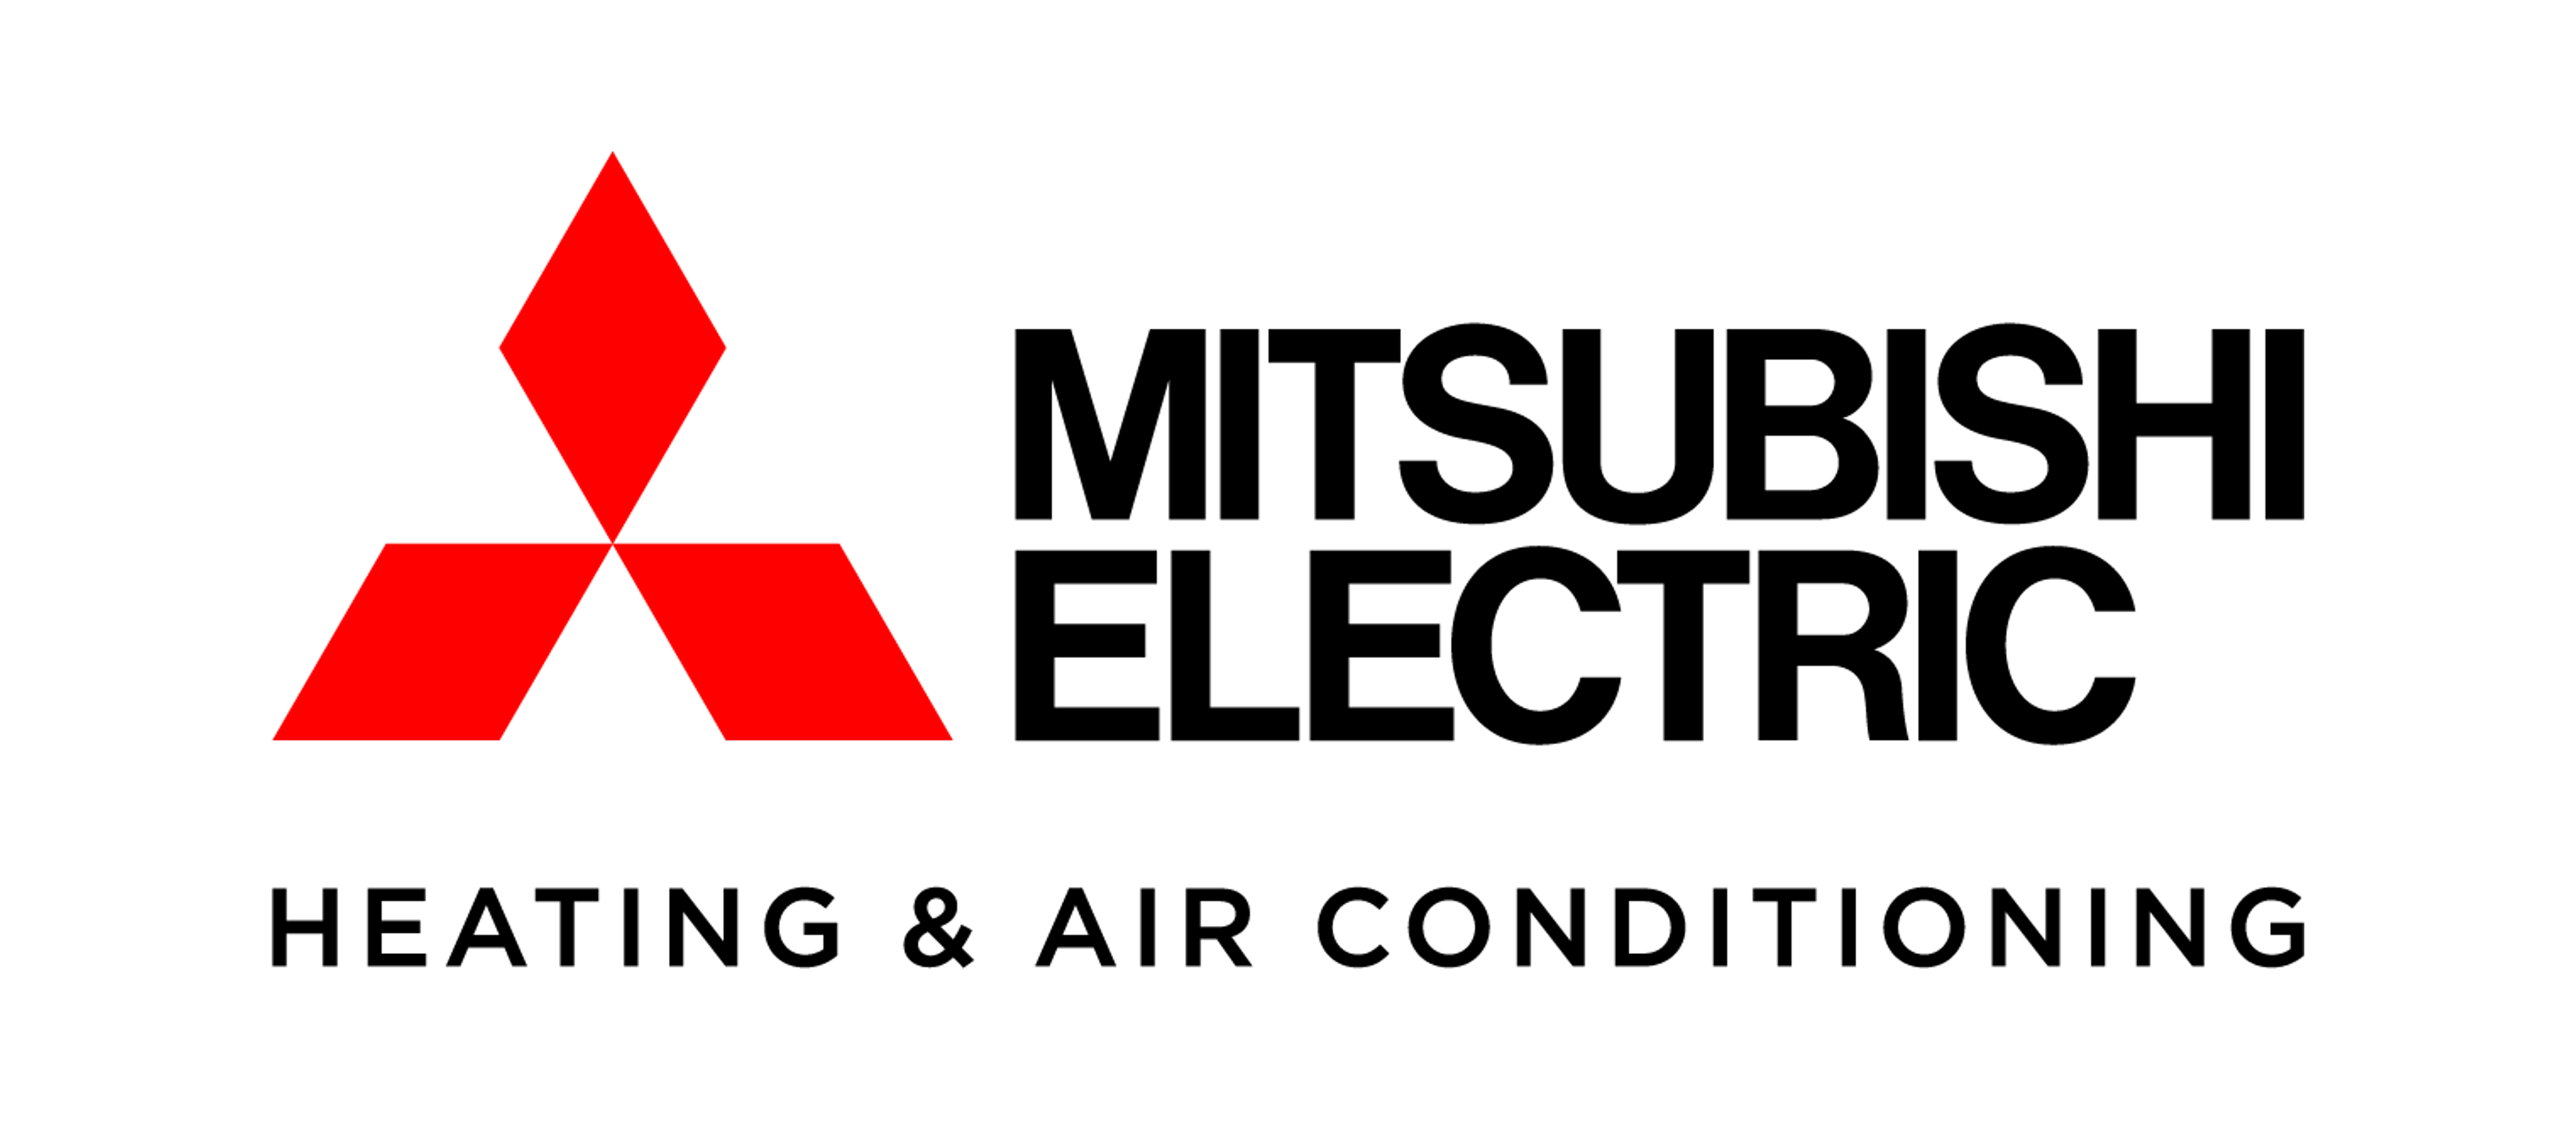 Mitsubishi Instant Rebate Promotion FergusonHVAC